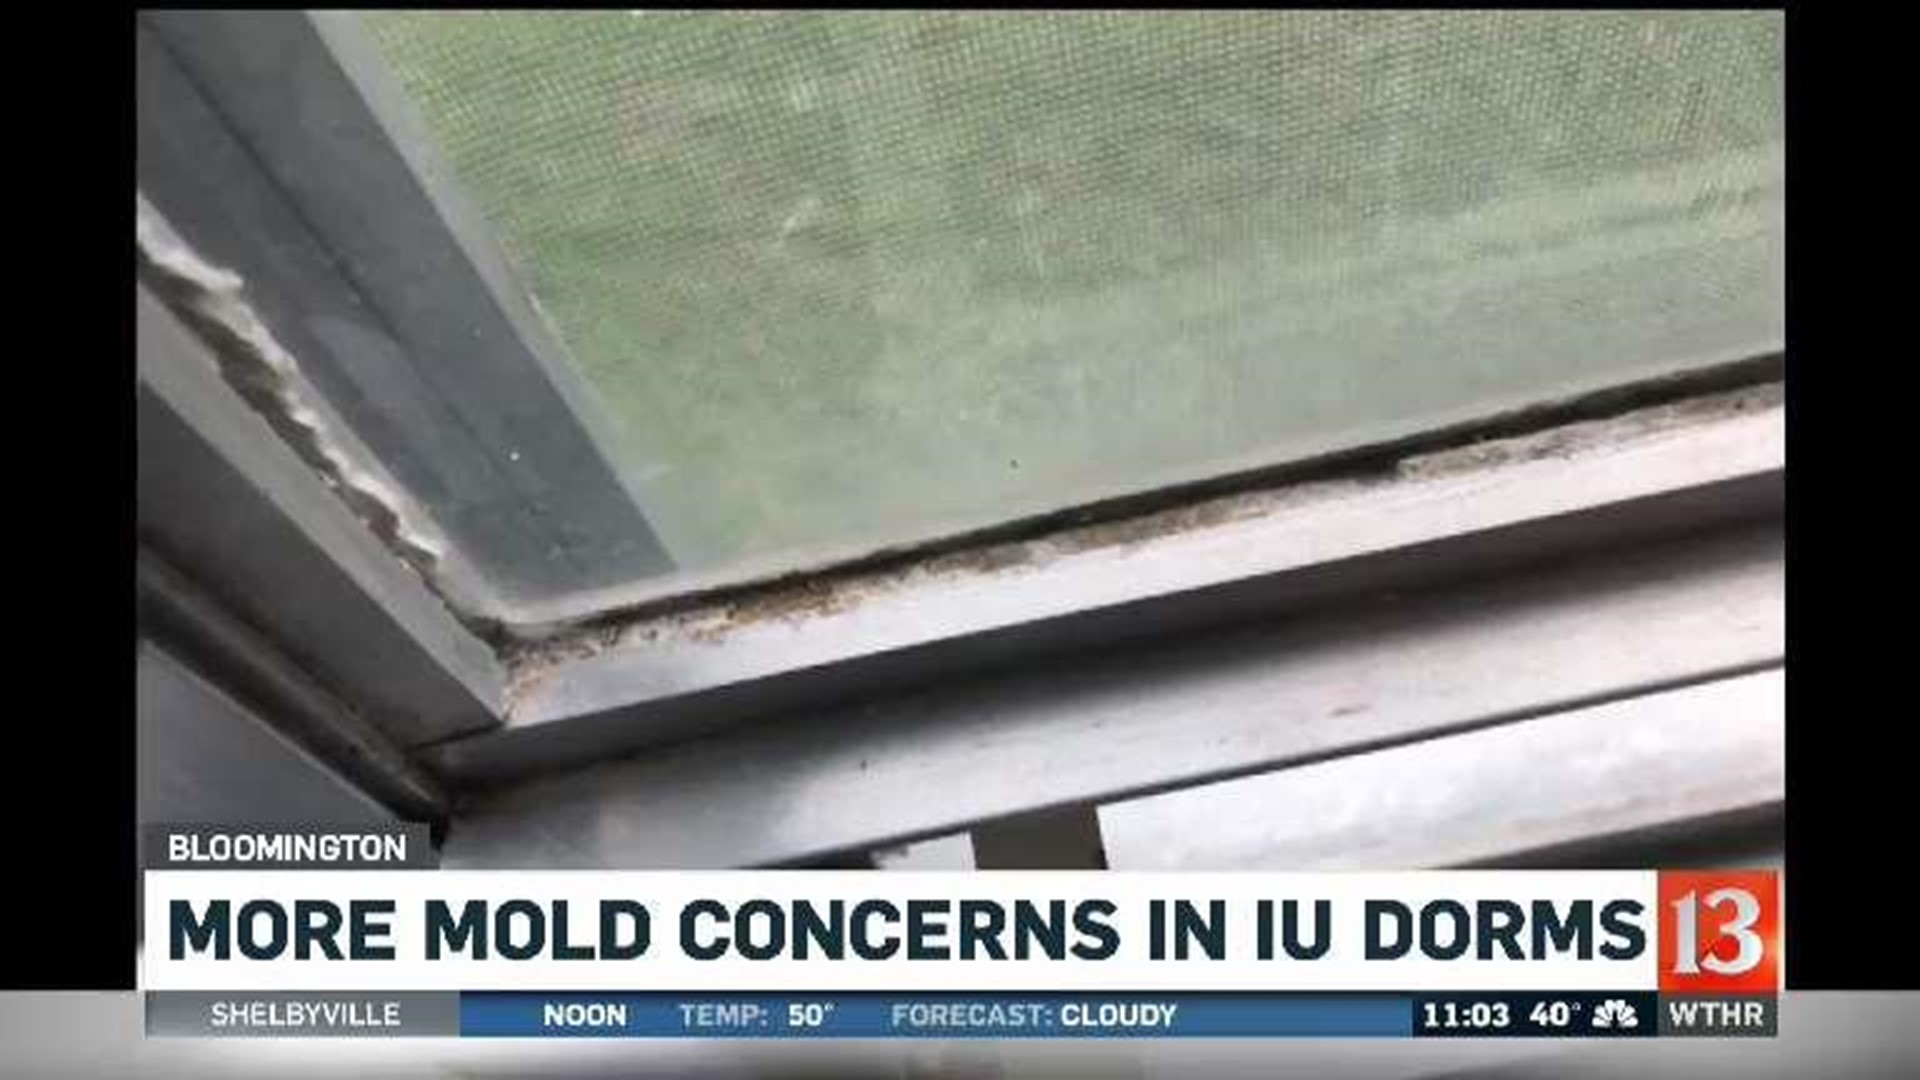 More mold concerns in IU dorms